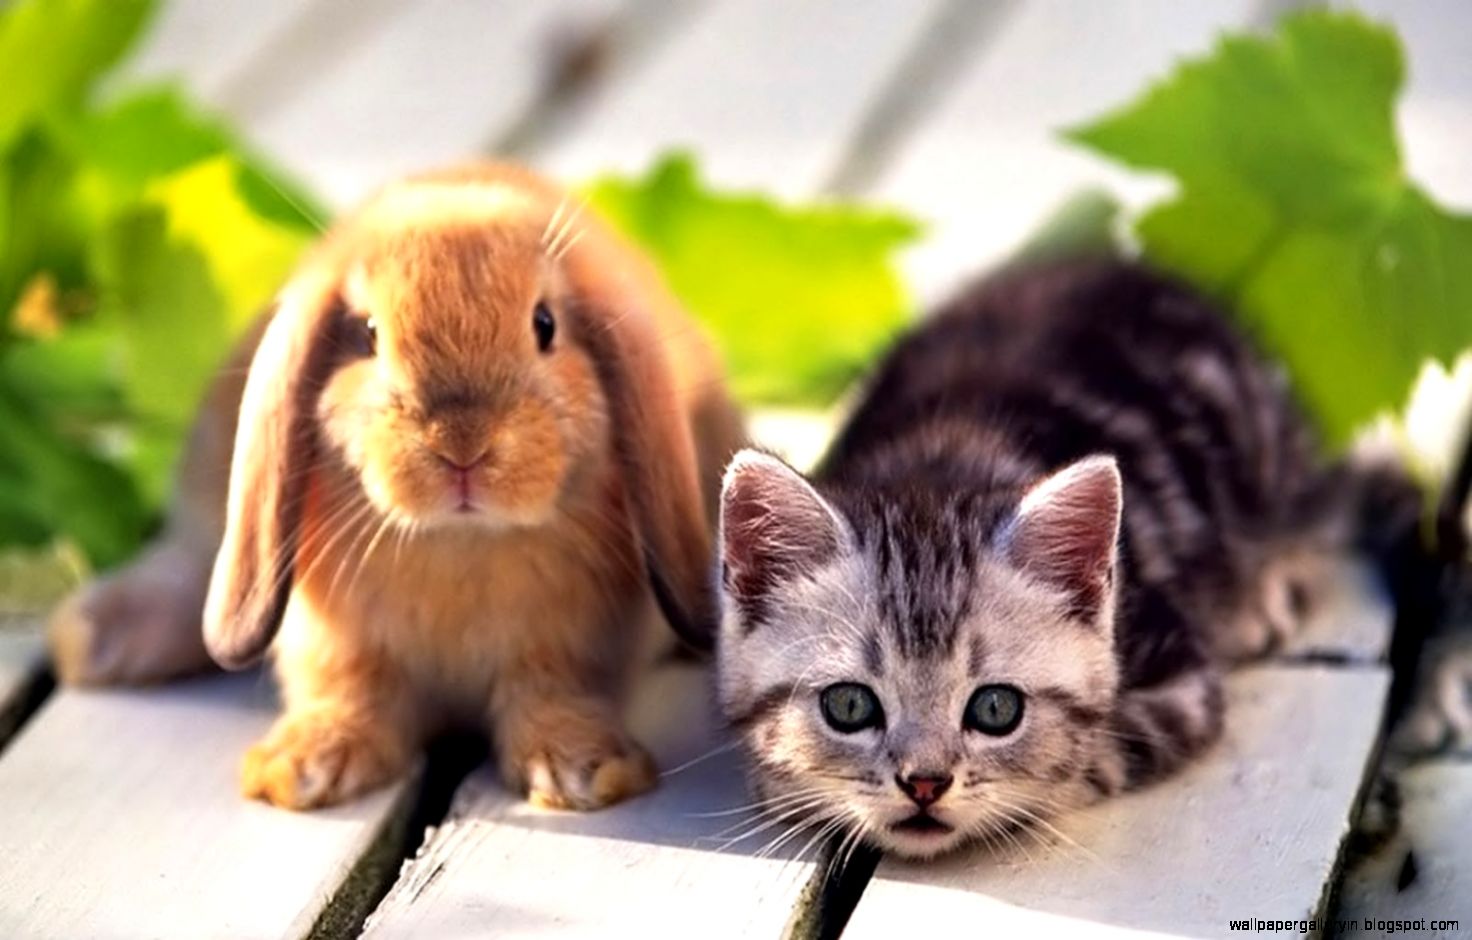 Cute Rabbit And Cat Wallpaper Hd Desktop | Wallpaper Gallery